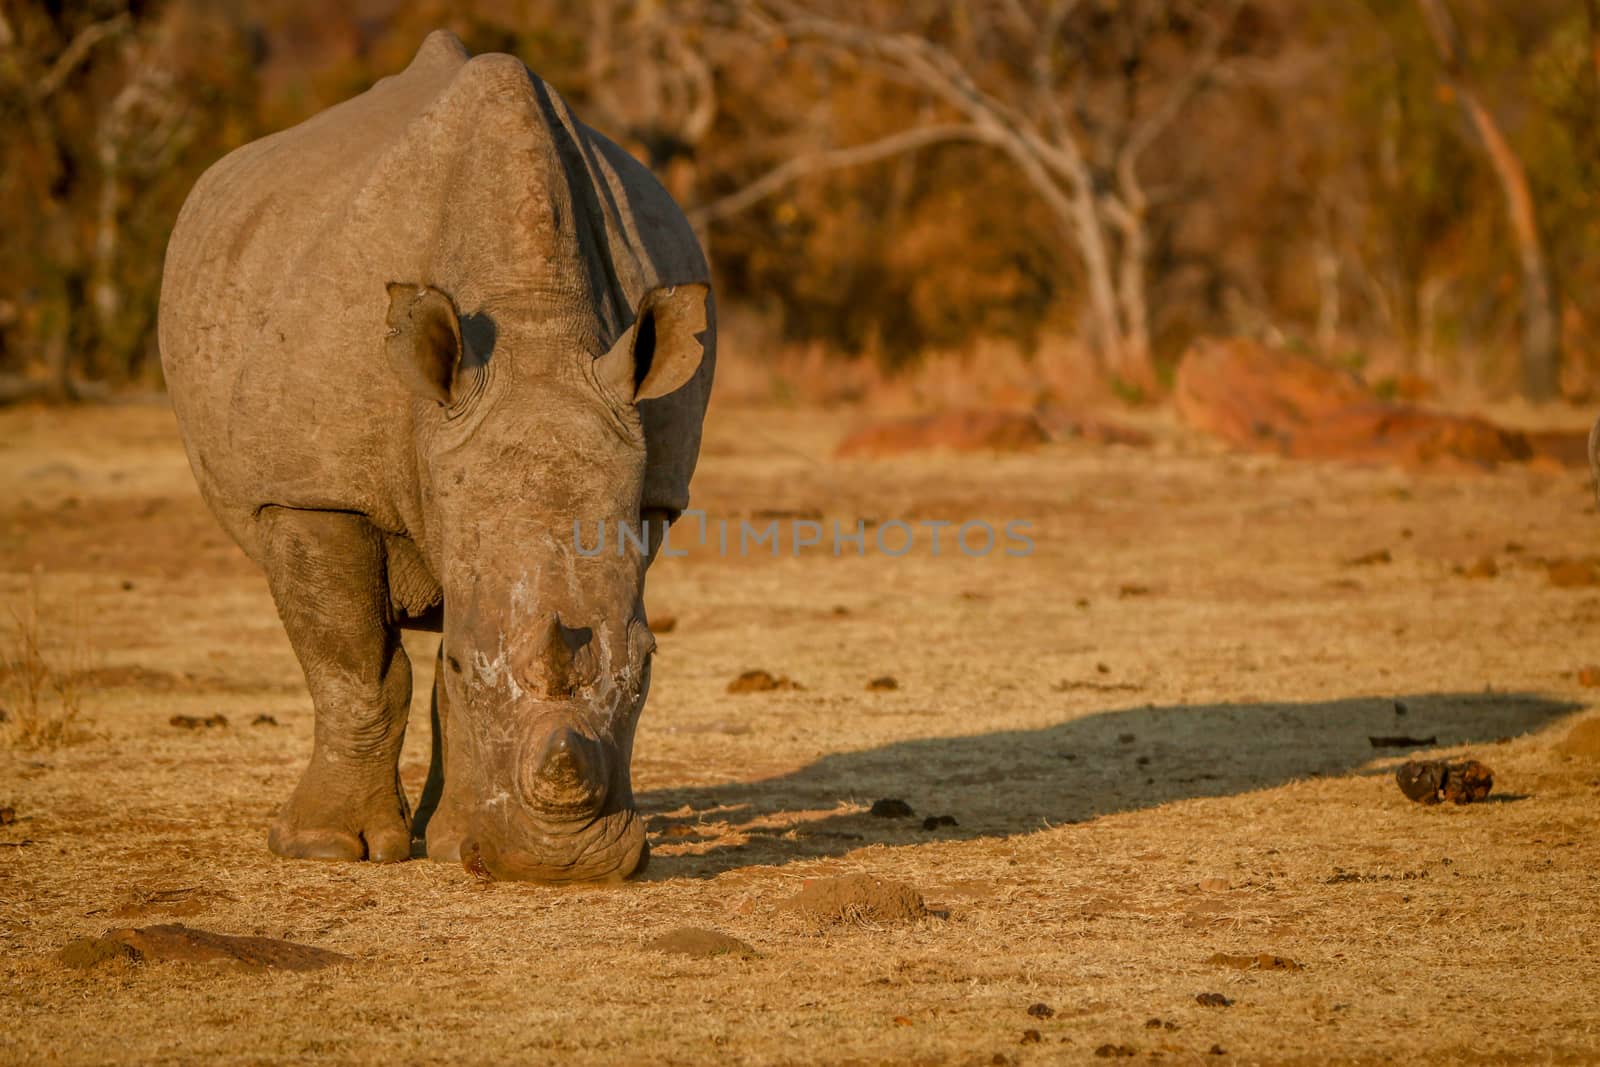 White rhino grazing in the golden light. by Simoneemanphotography